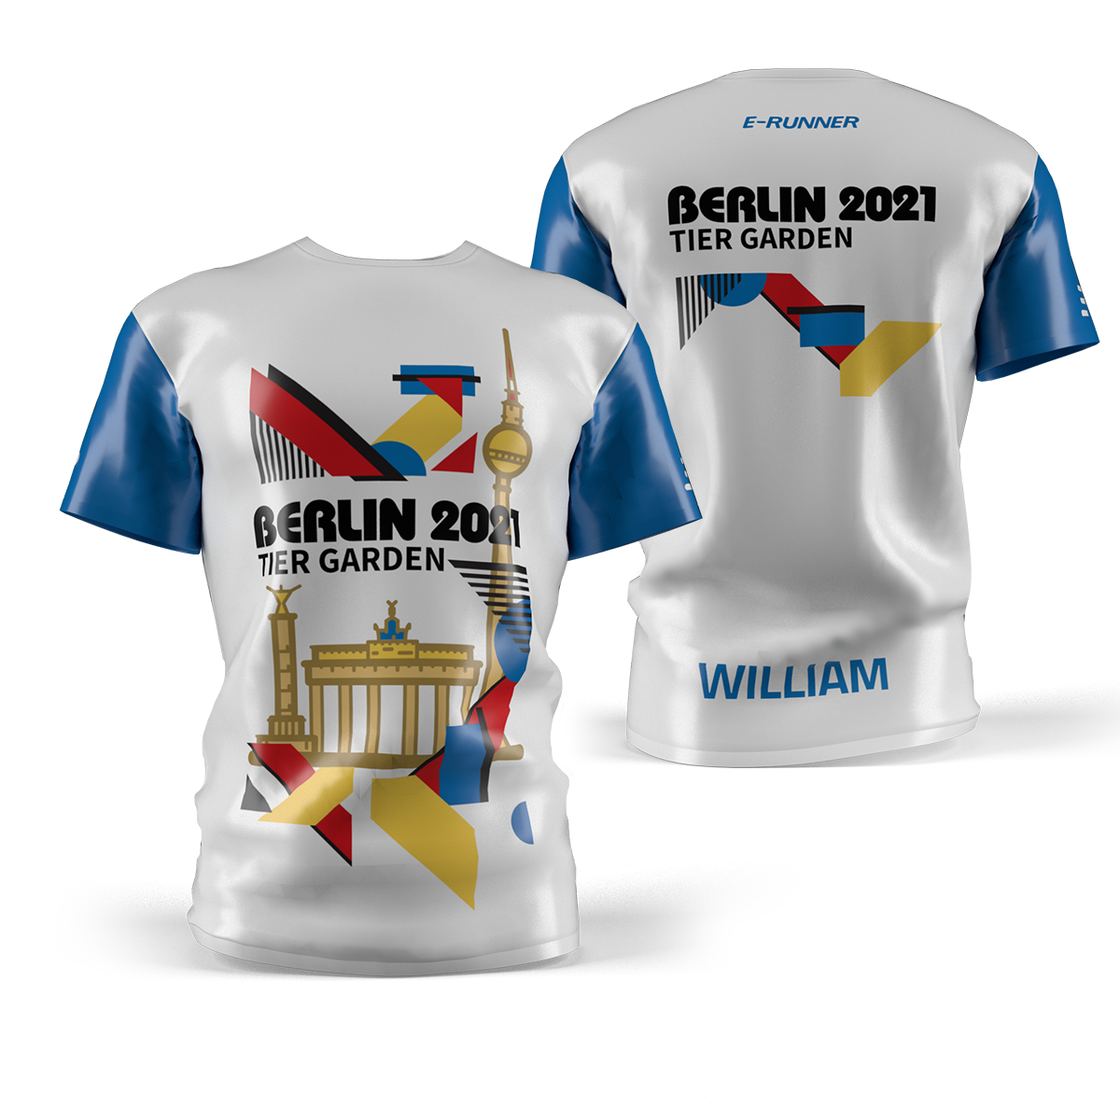 SPECIAL OFFER: Stunning Medal + Official T-Shirt | BERLIN Marathon 2021 | June 12-13th